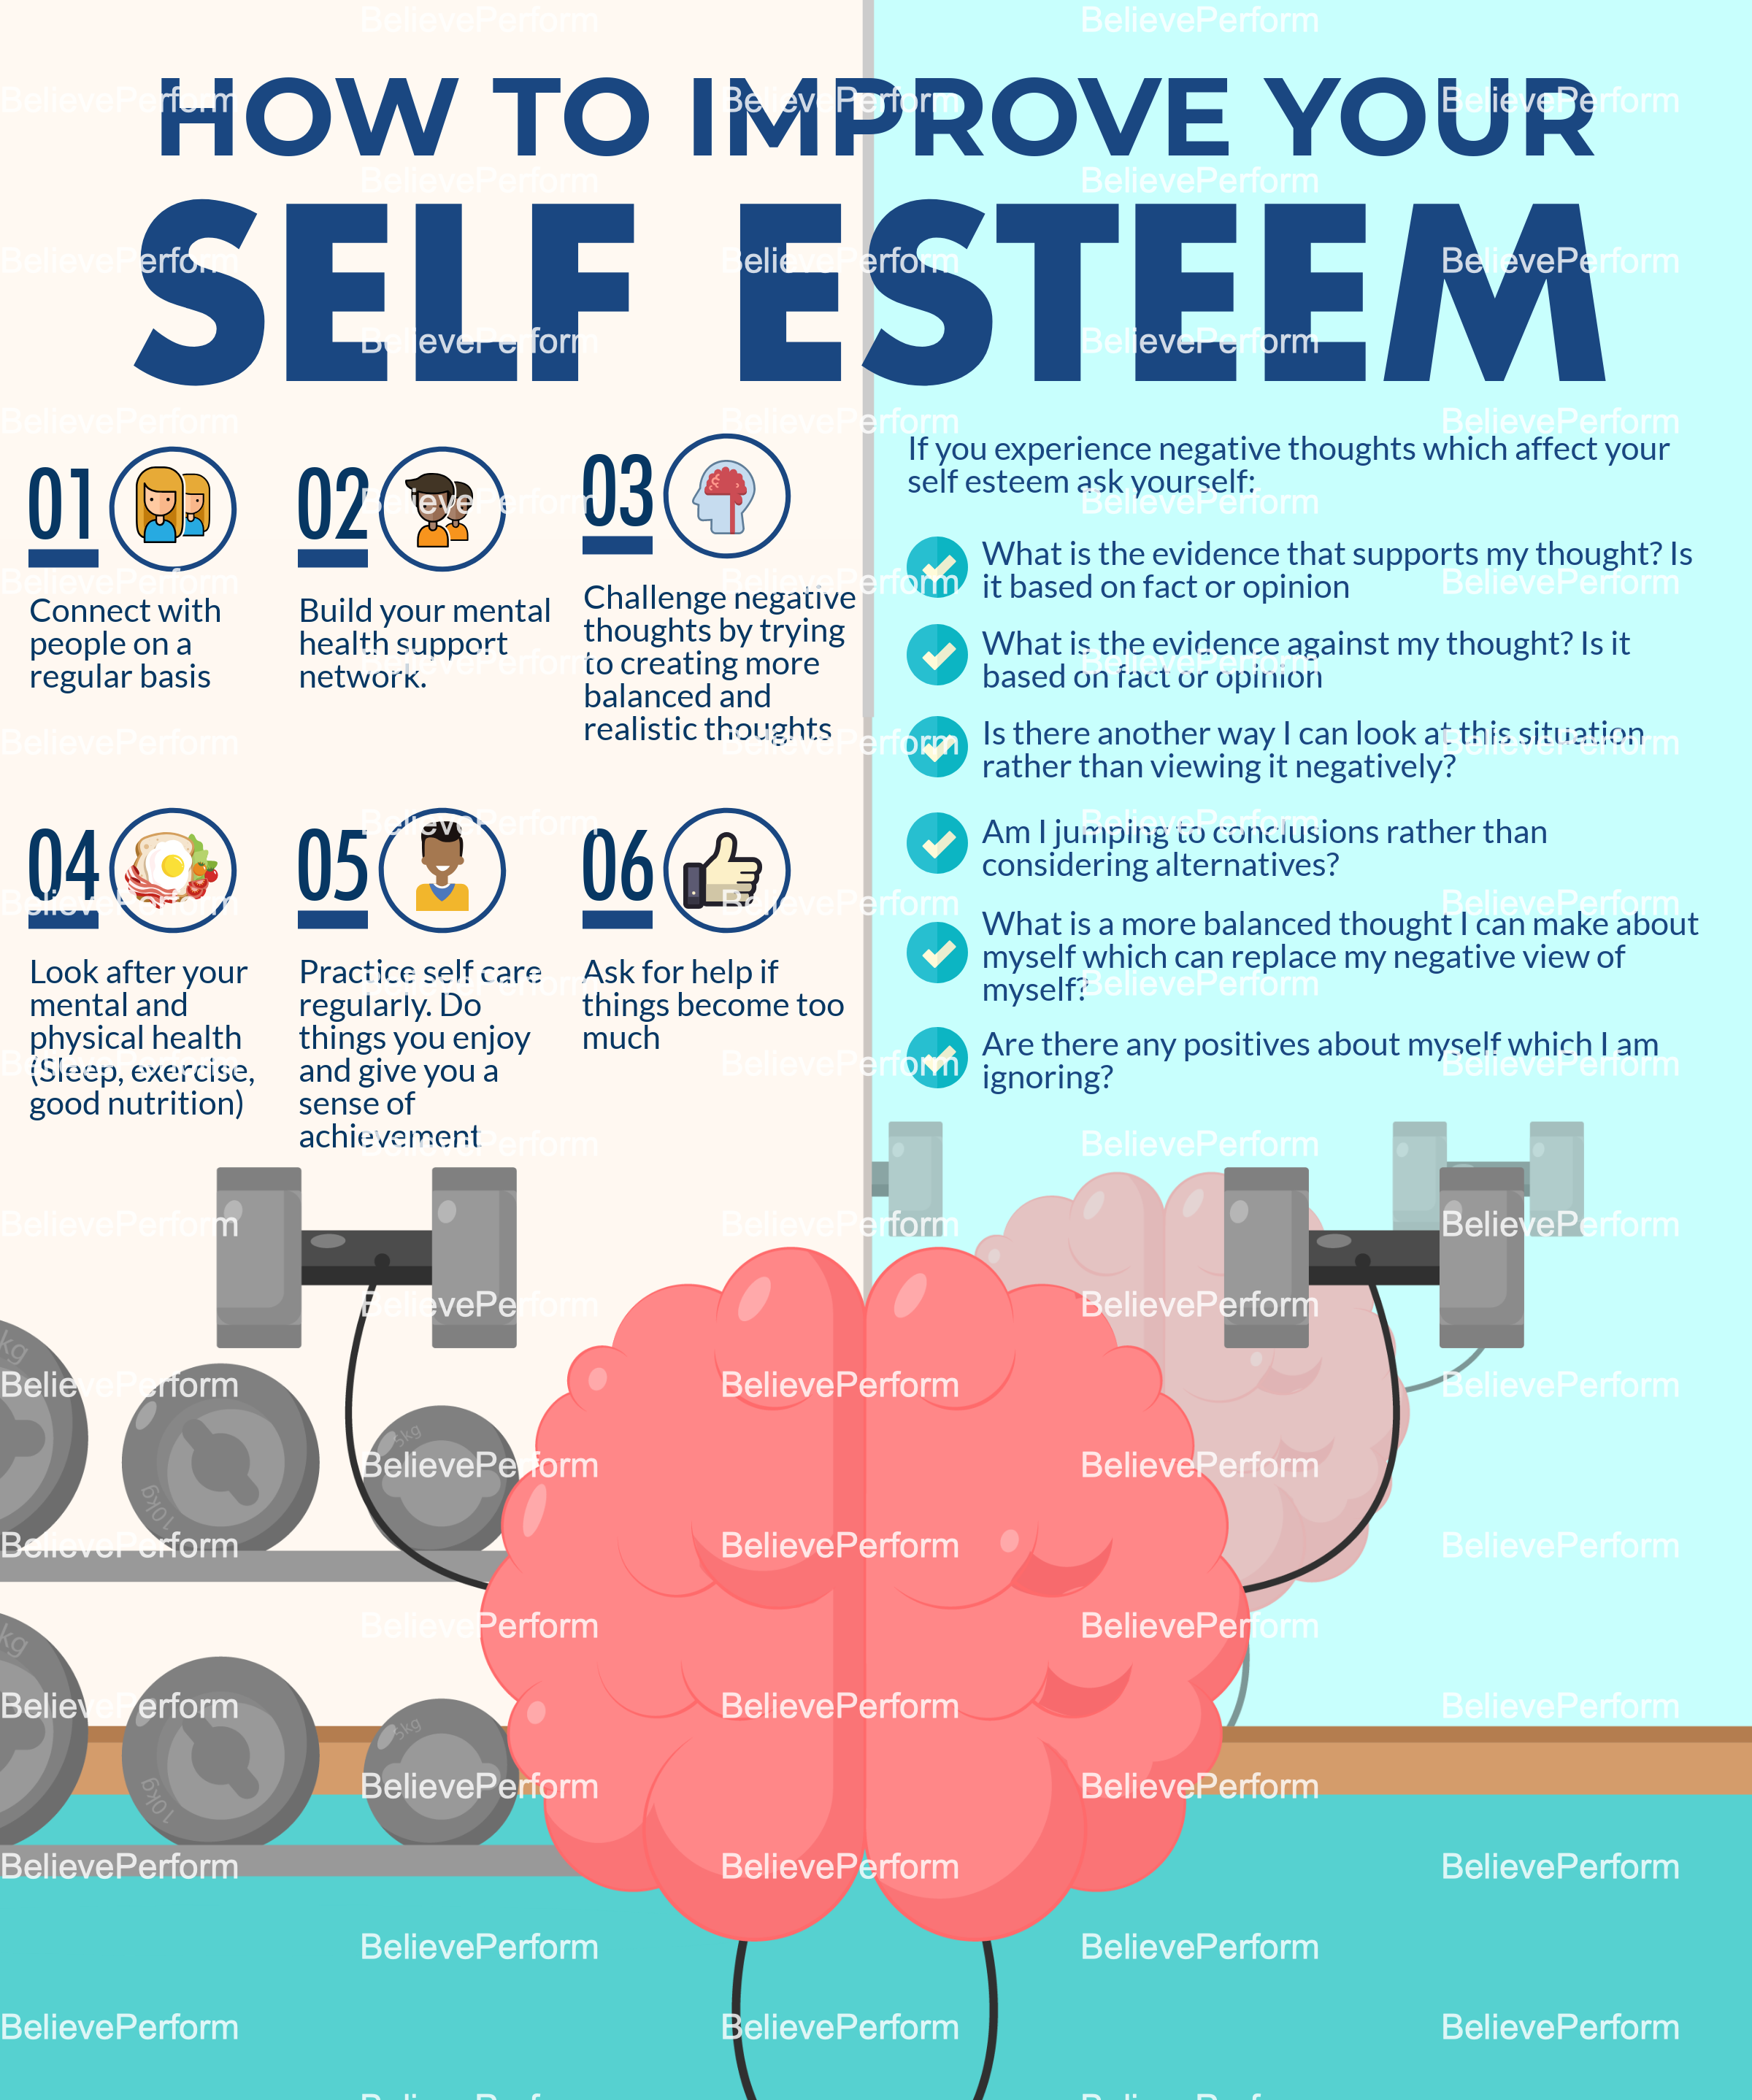 https://members.believeperform.com/wp-content/uploads/2019/09/How-to-improve-your-self-esteem.png